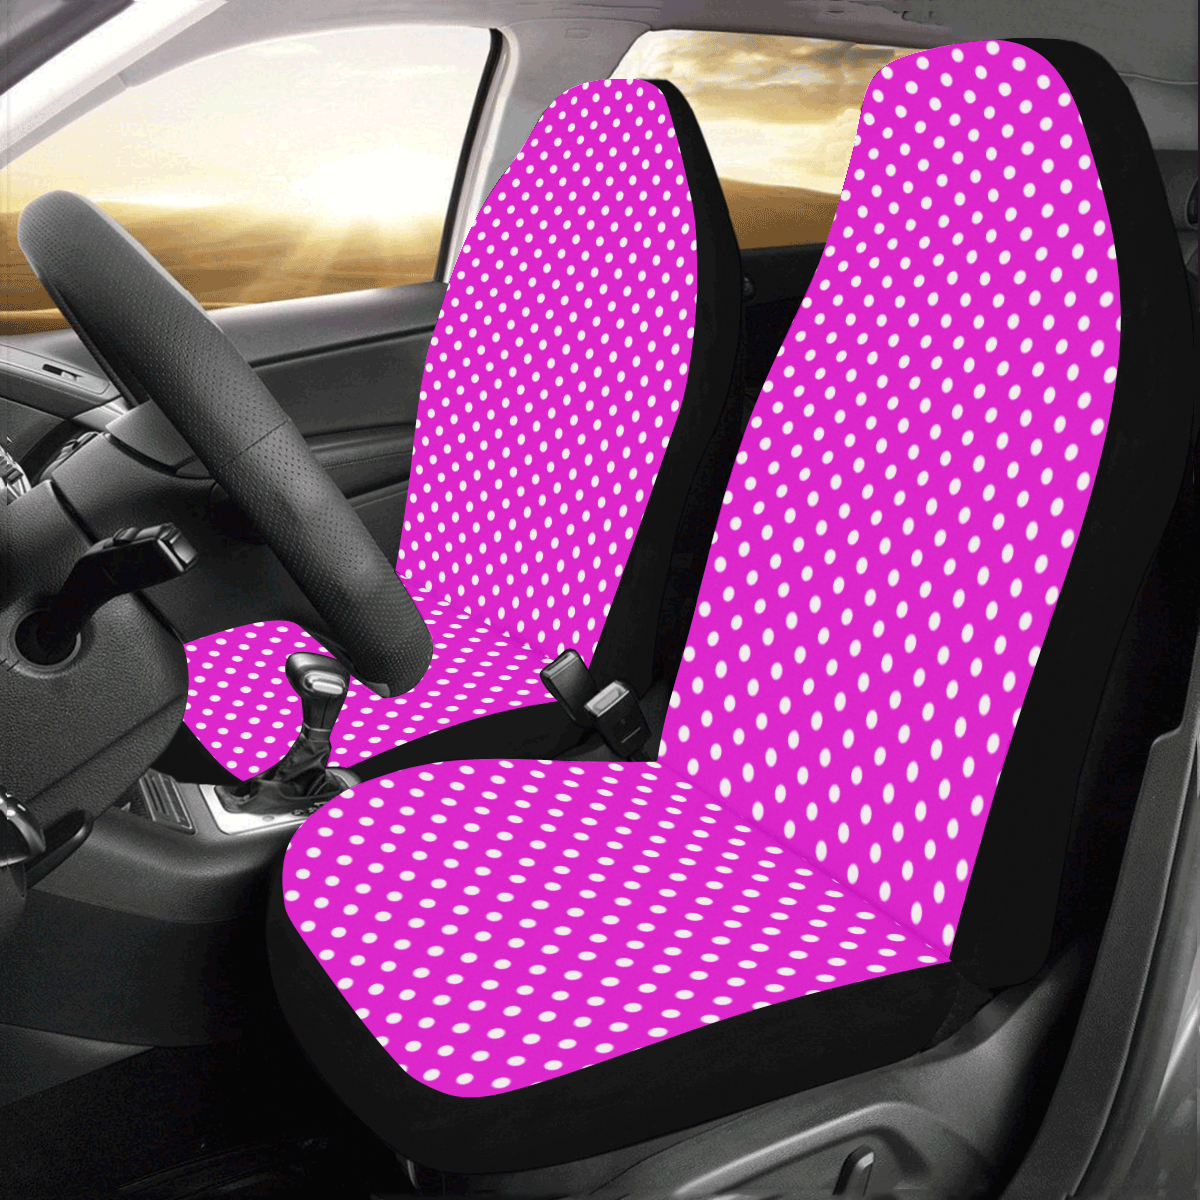 Pink polka dots Car Seat Covers (Set of 2)